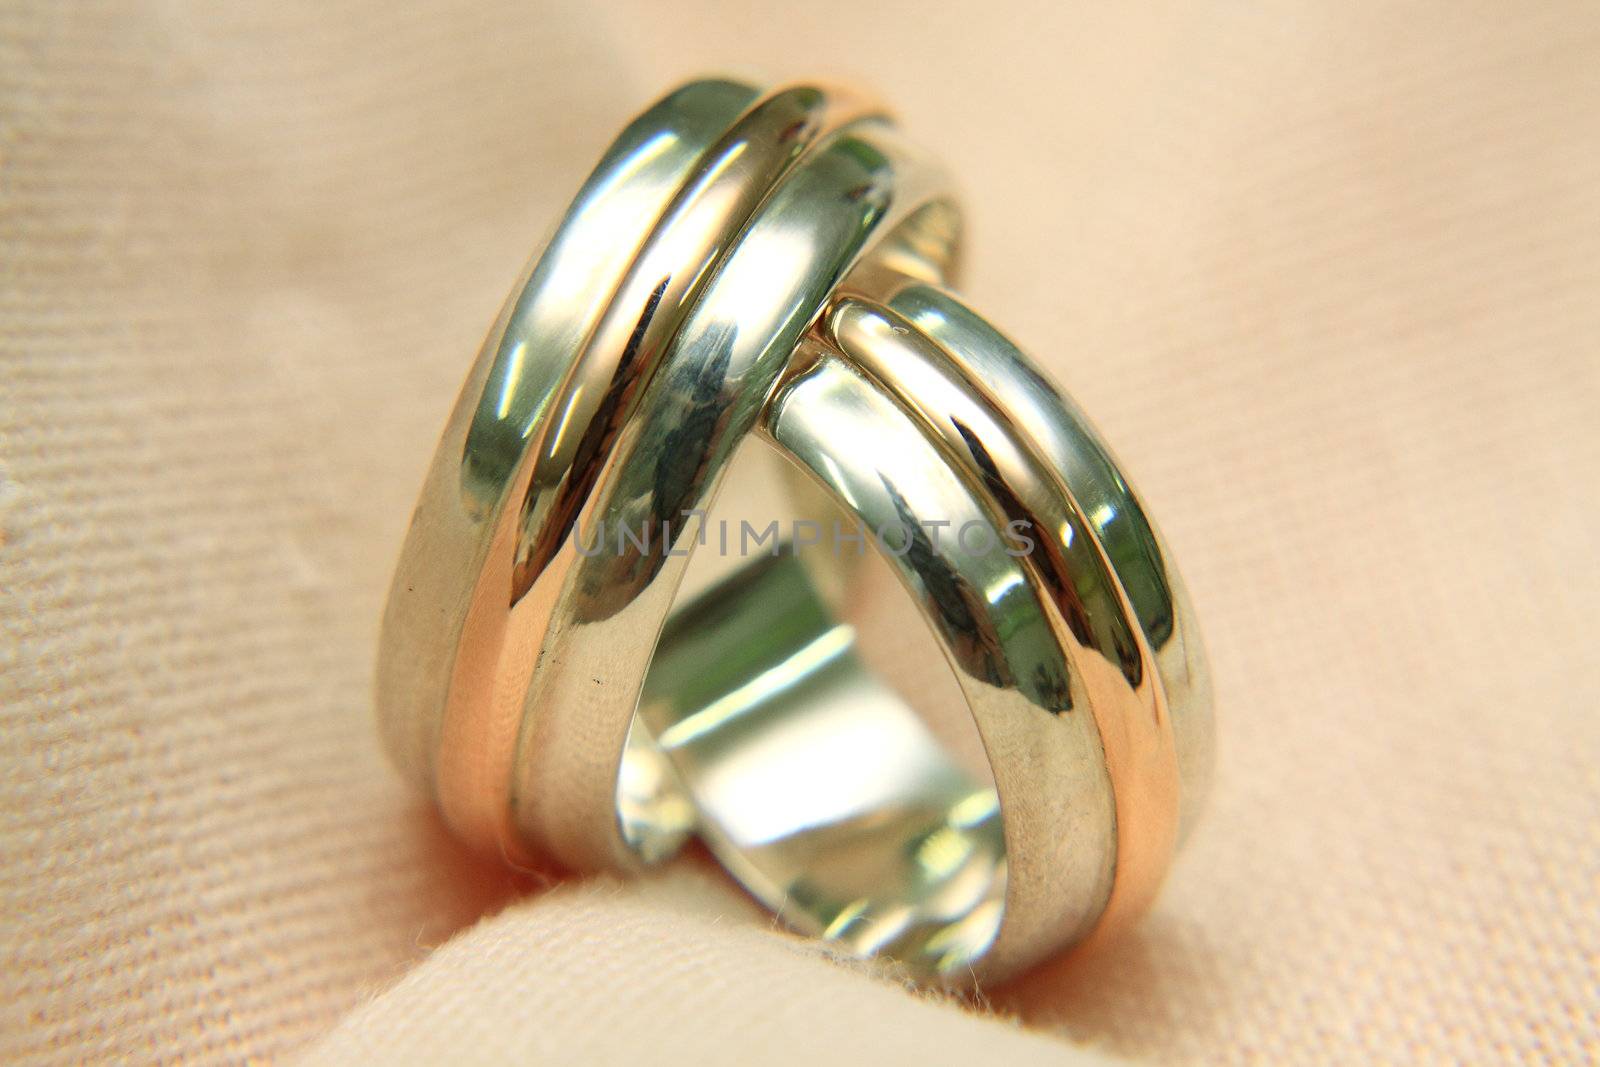 Wedding rings by selinsmo